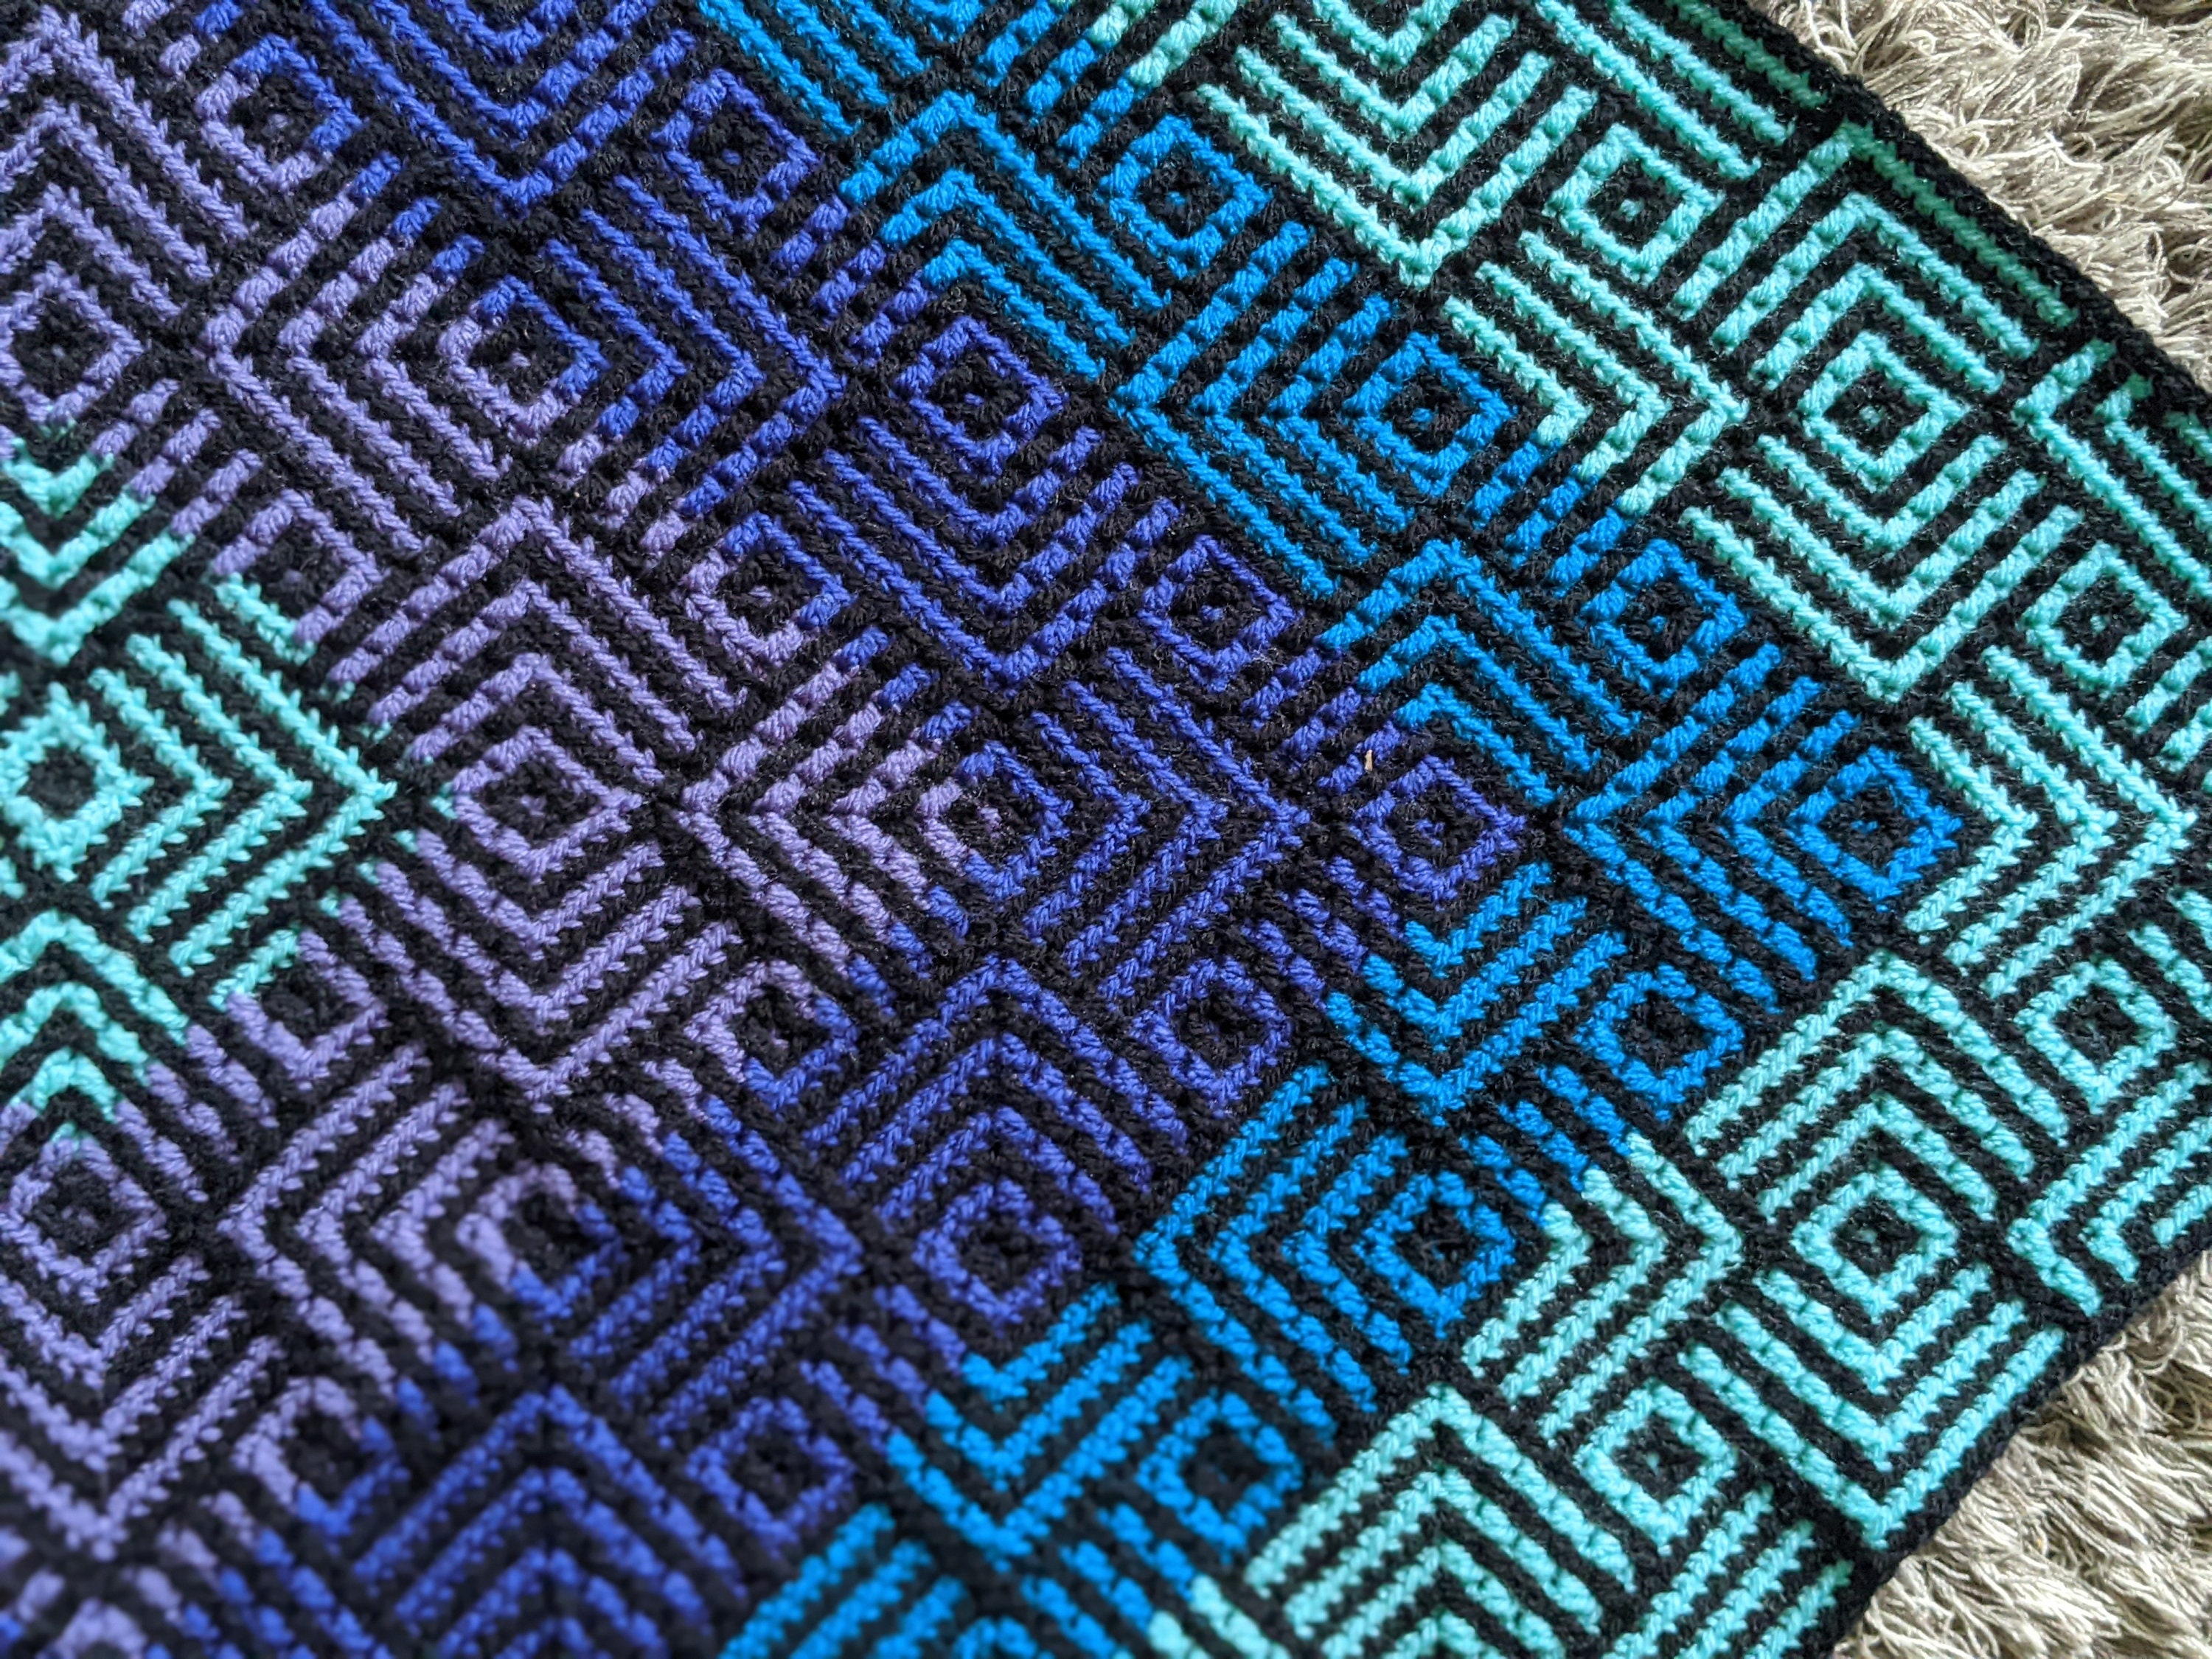 Intricate Mosaic Crochet Blankets - Pattern Center